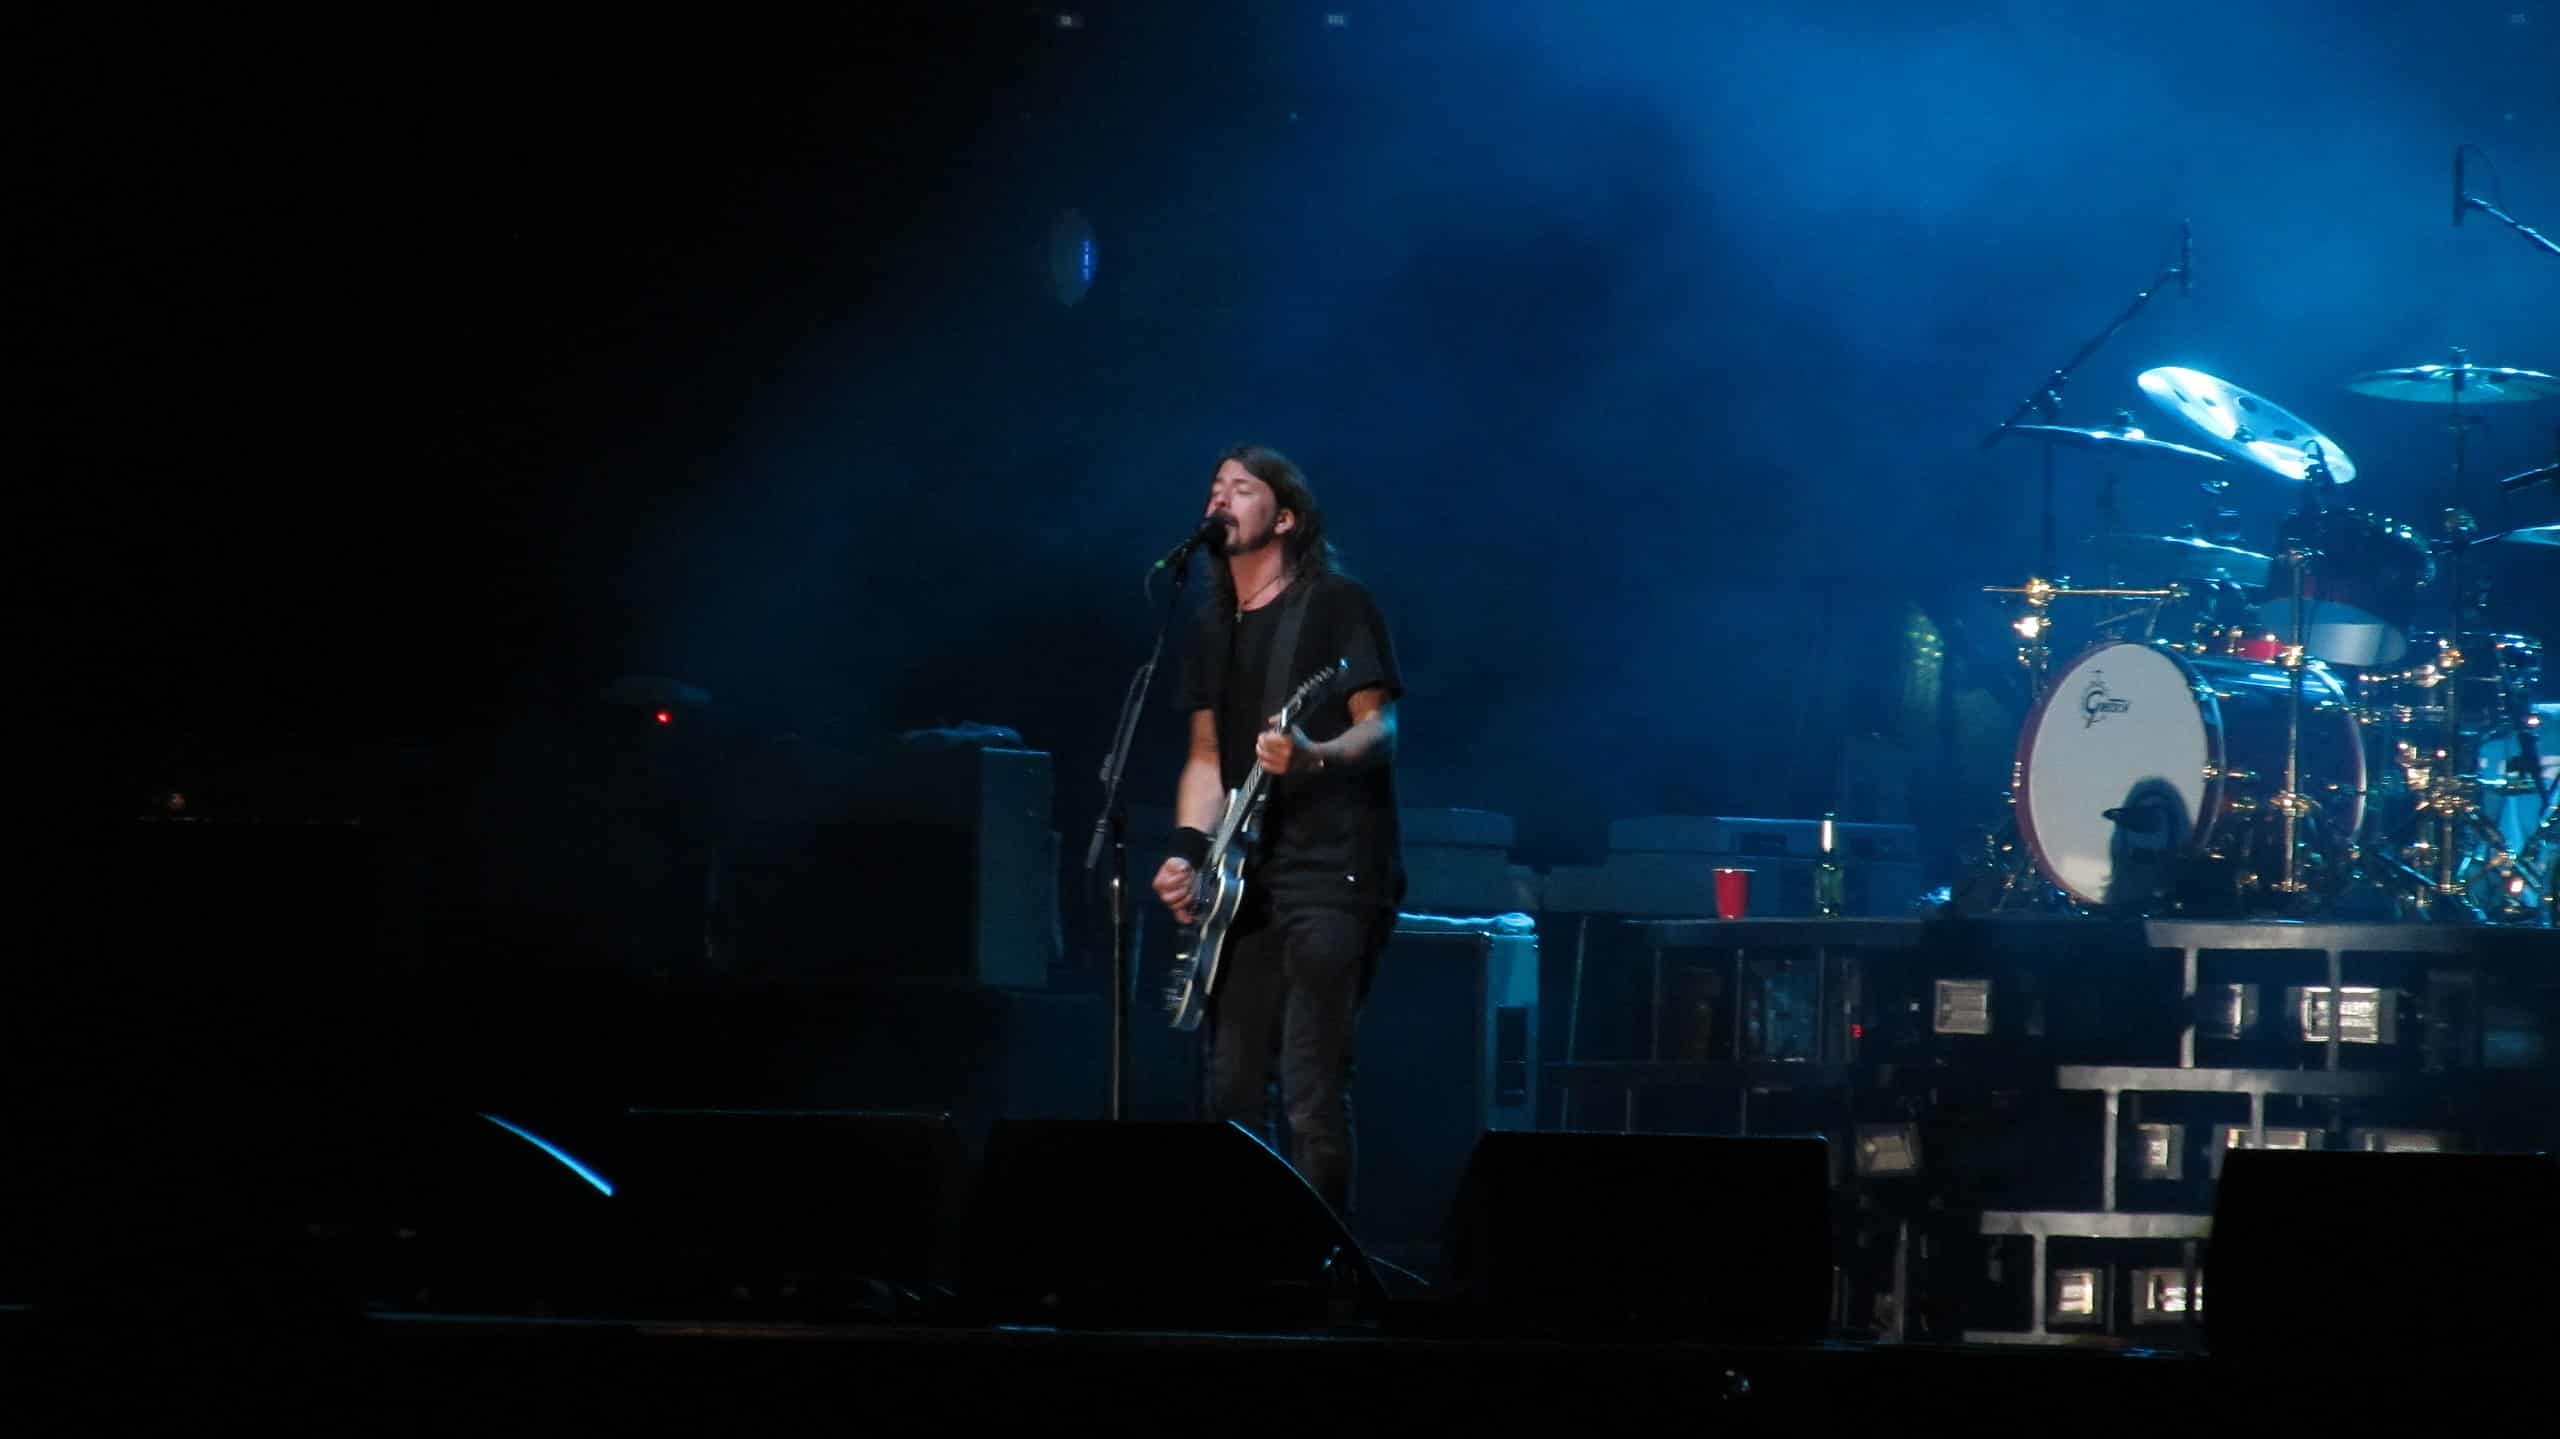 Dave Grohl at Lollapalooza (Credit: Warkoholic)